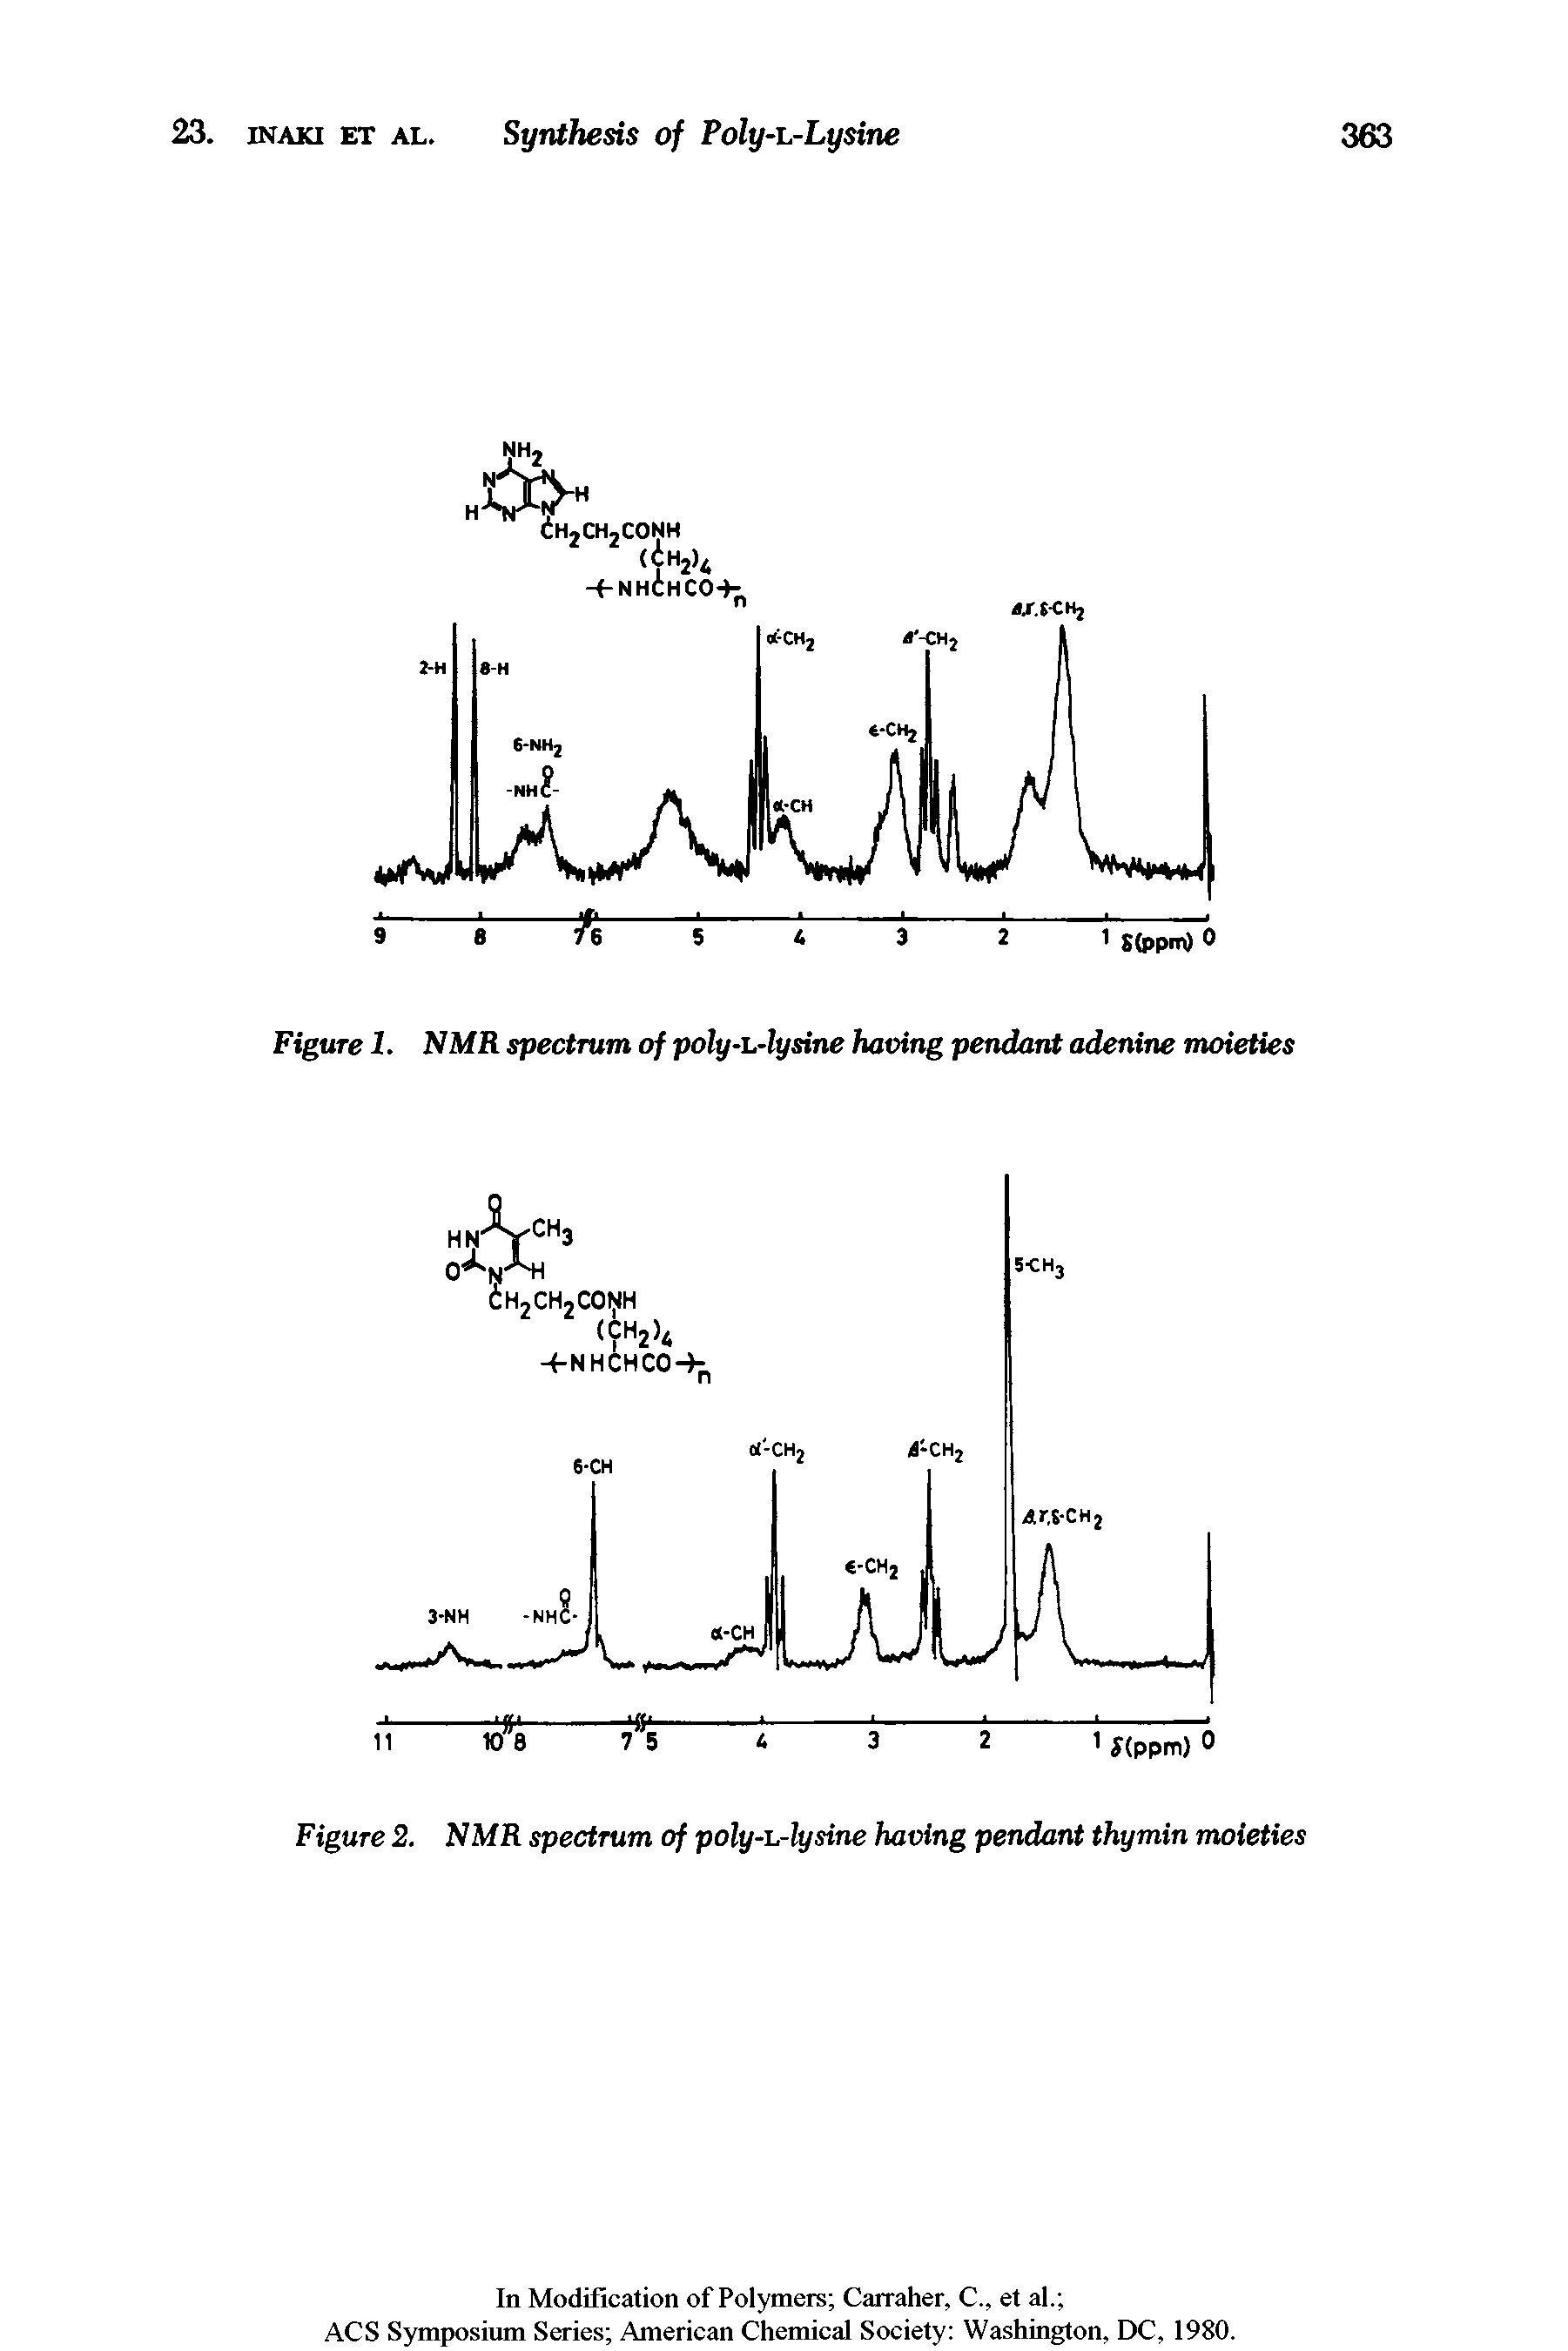 Figure 2. NMR spectrum of poly- Aysine having pendant thymin moieties...